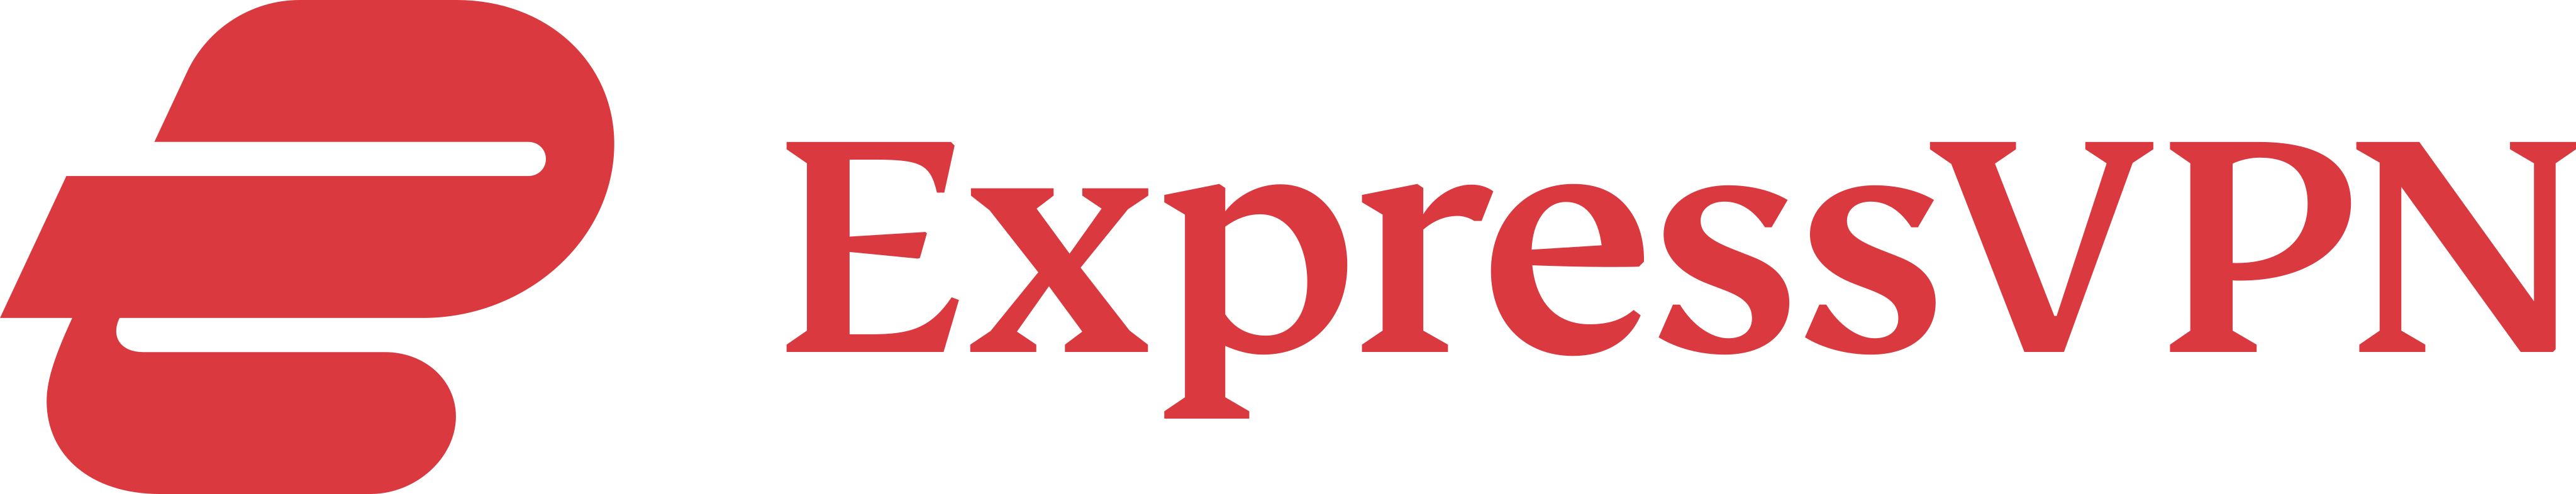 expressvpn logo - ExpressVPN Logo